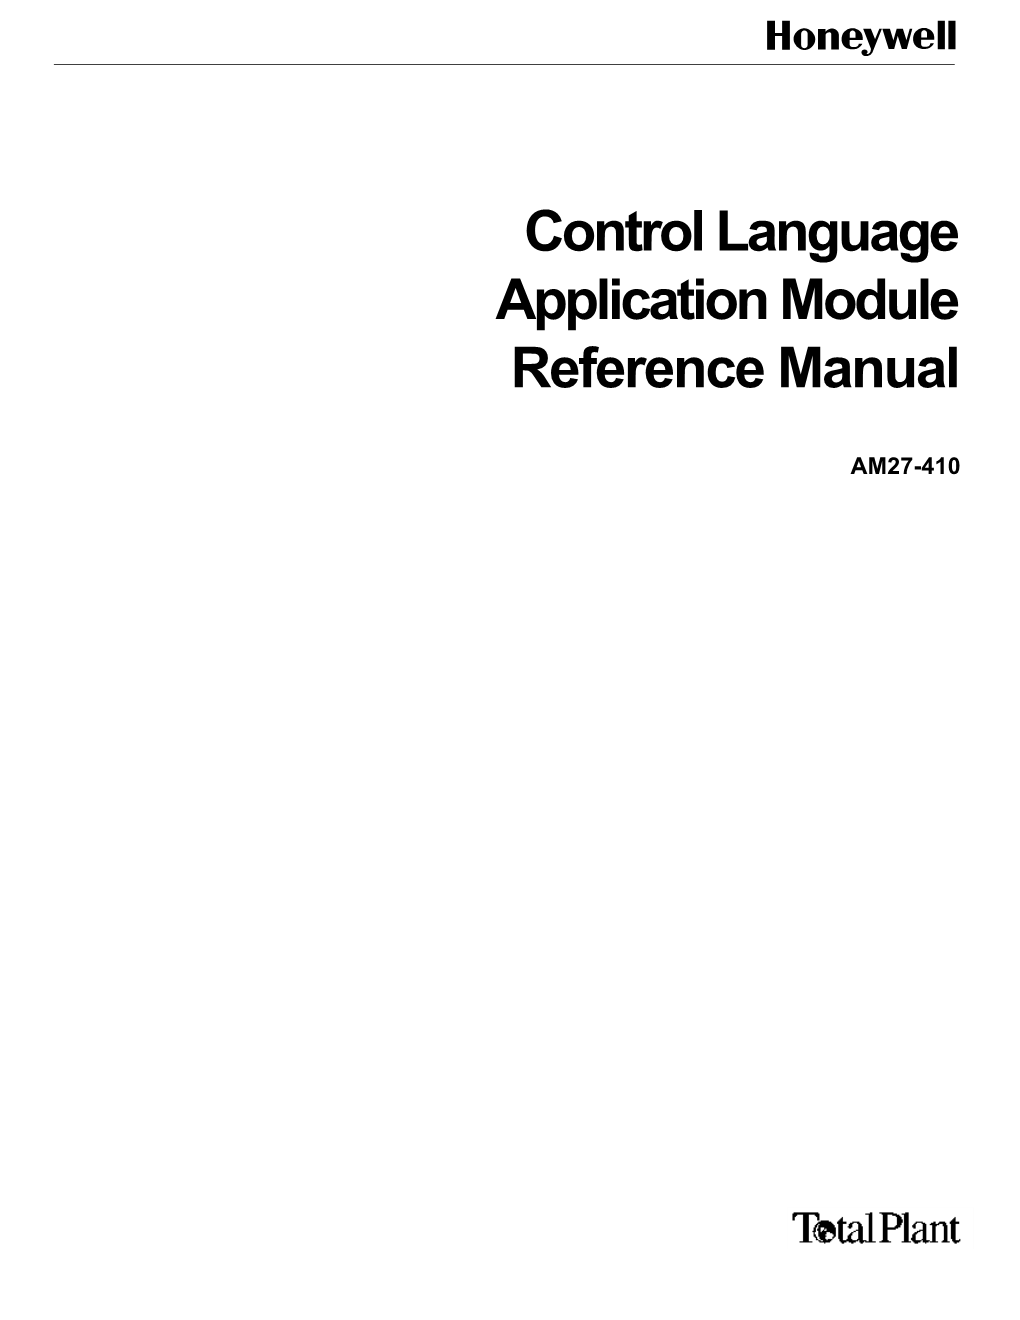 Control Language Application Module Reference Manual